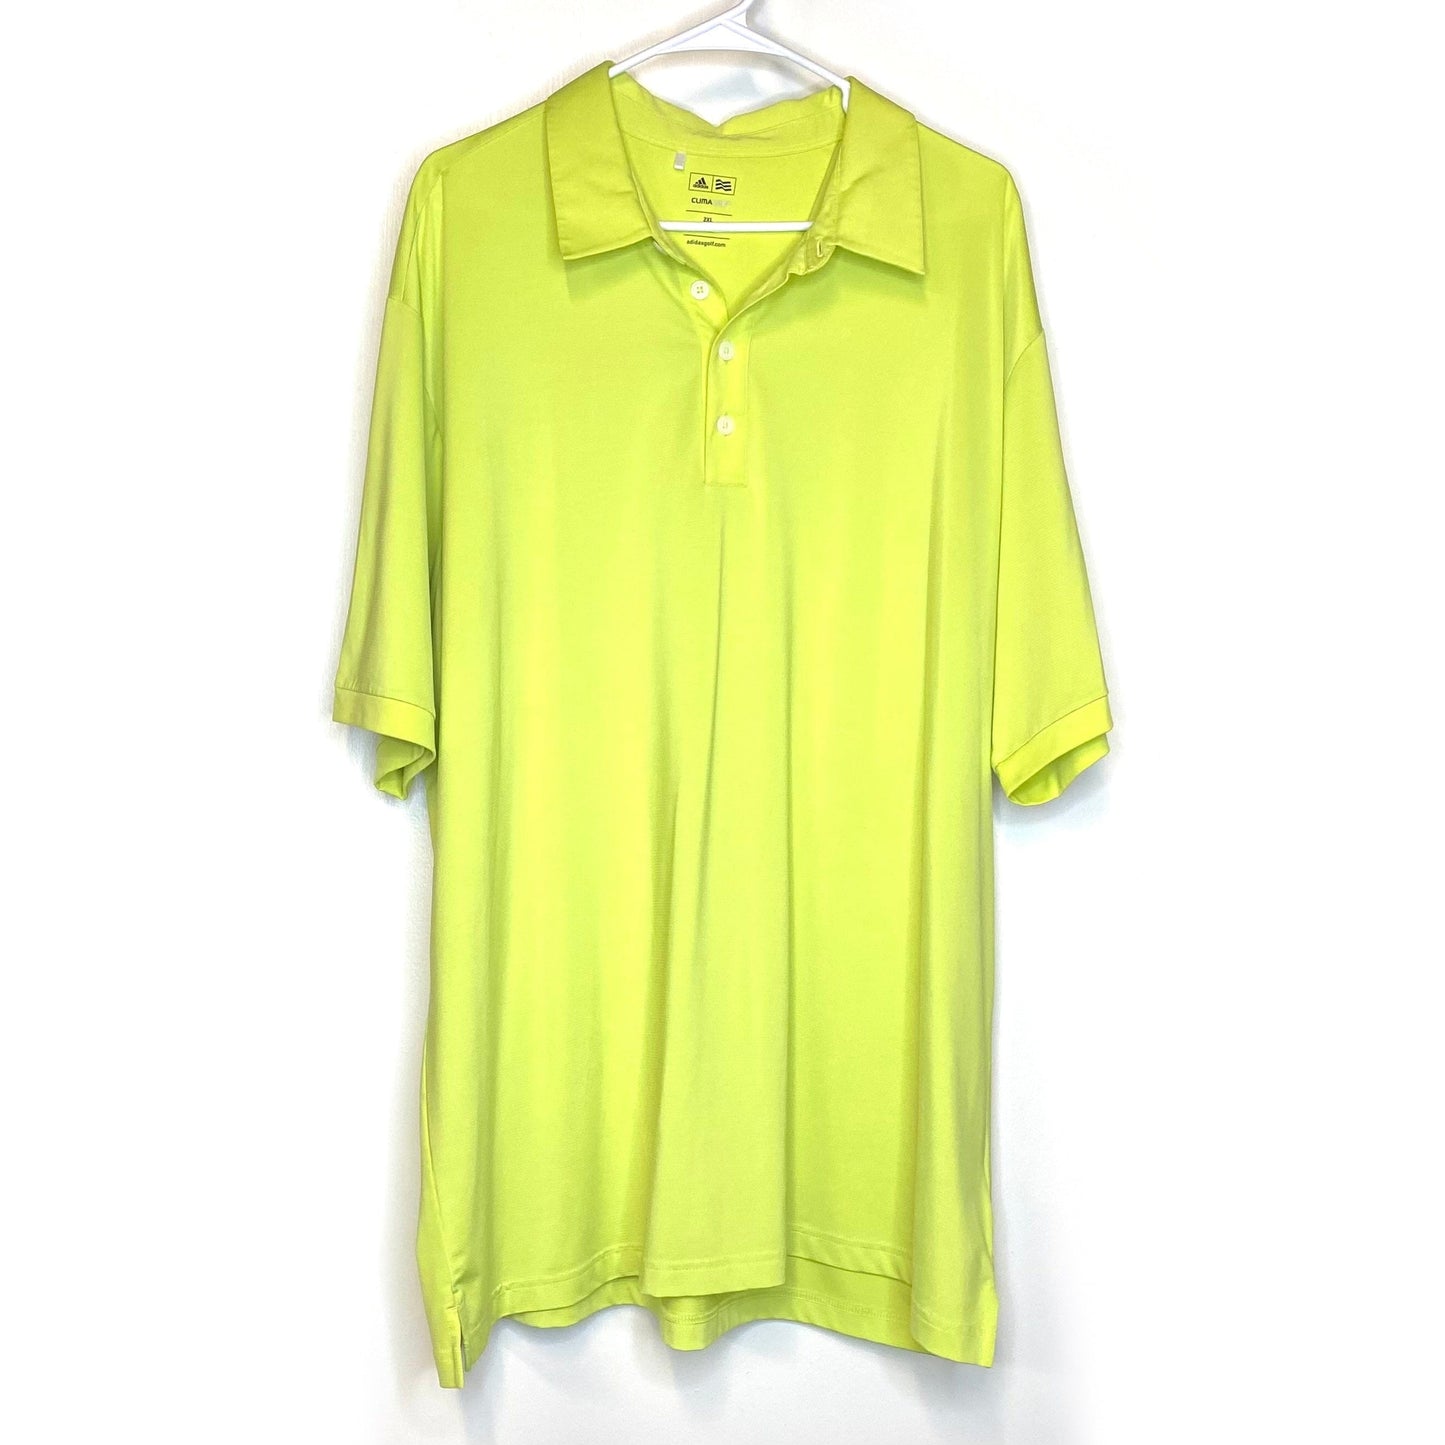 Adidas Climalite Mens Size 2XL Bright Yellow Polo Golf Shirt S/s “Lakeridge Country Club”